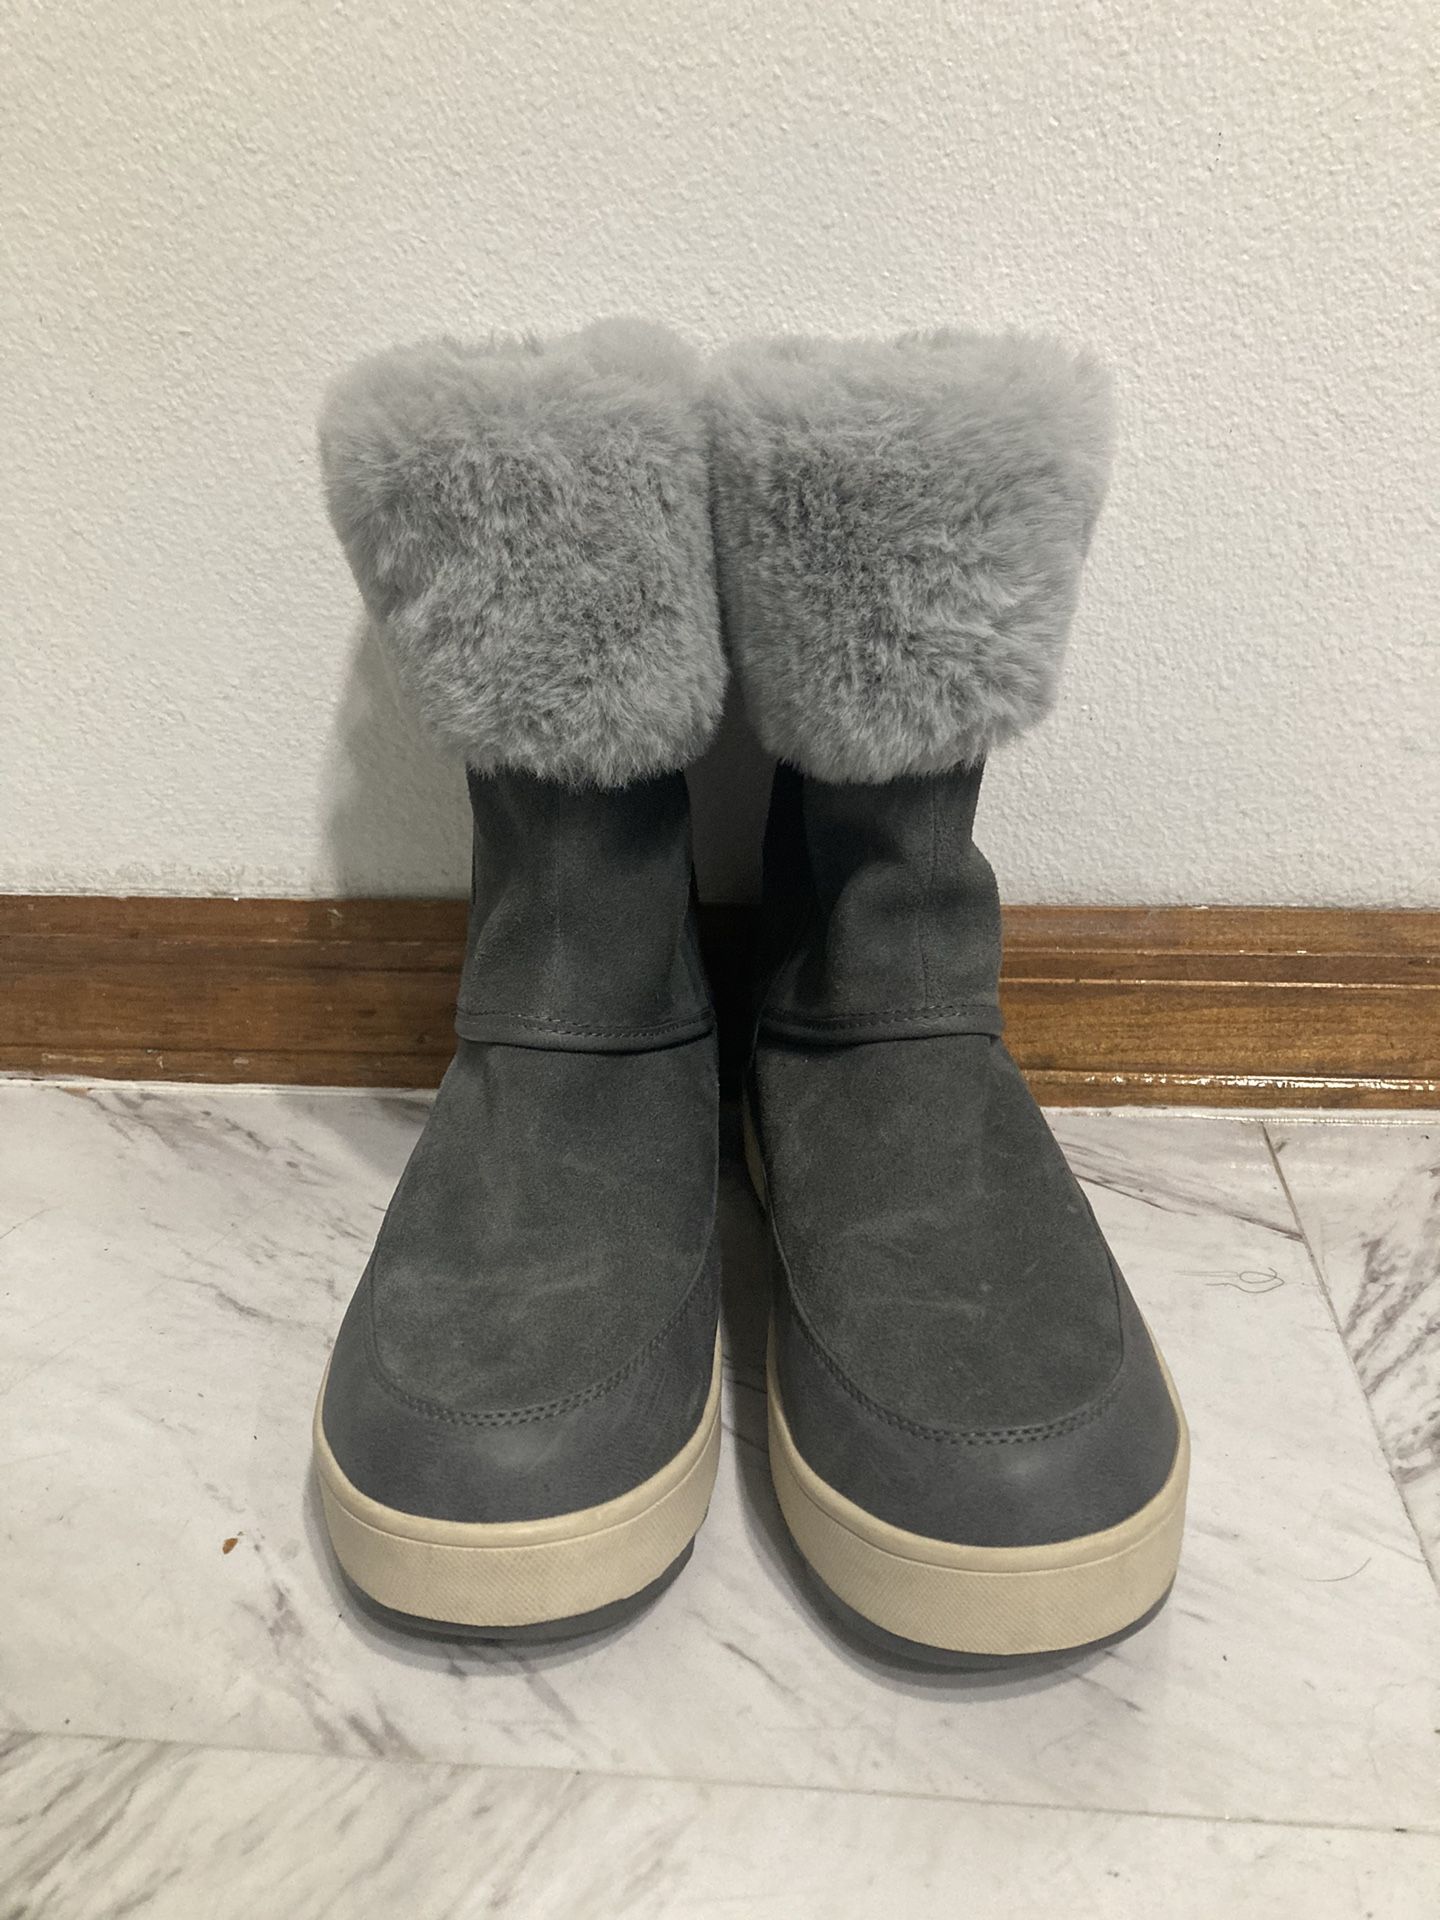 One,pair Of Kookaburra, LadiesUG Boots. Size 6